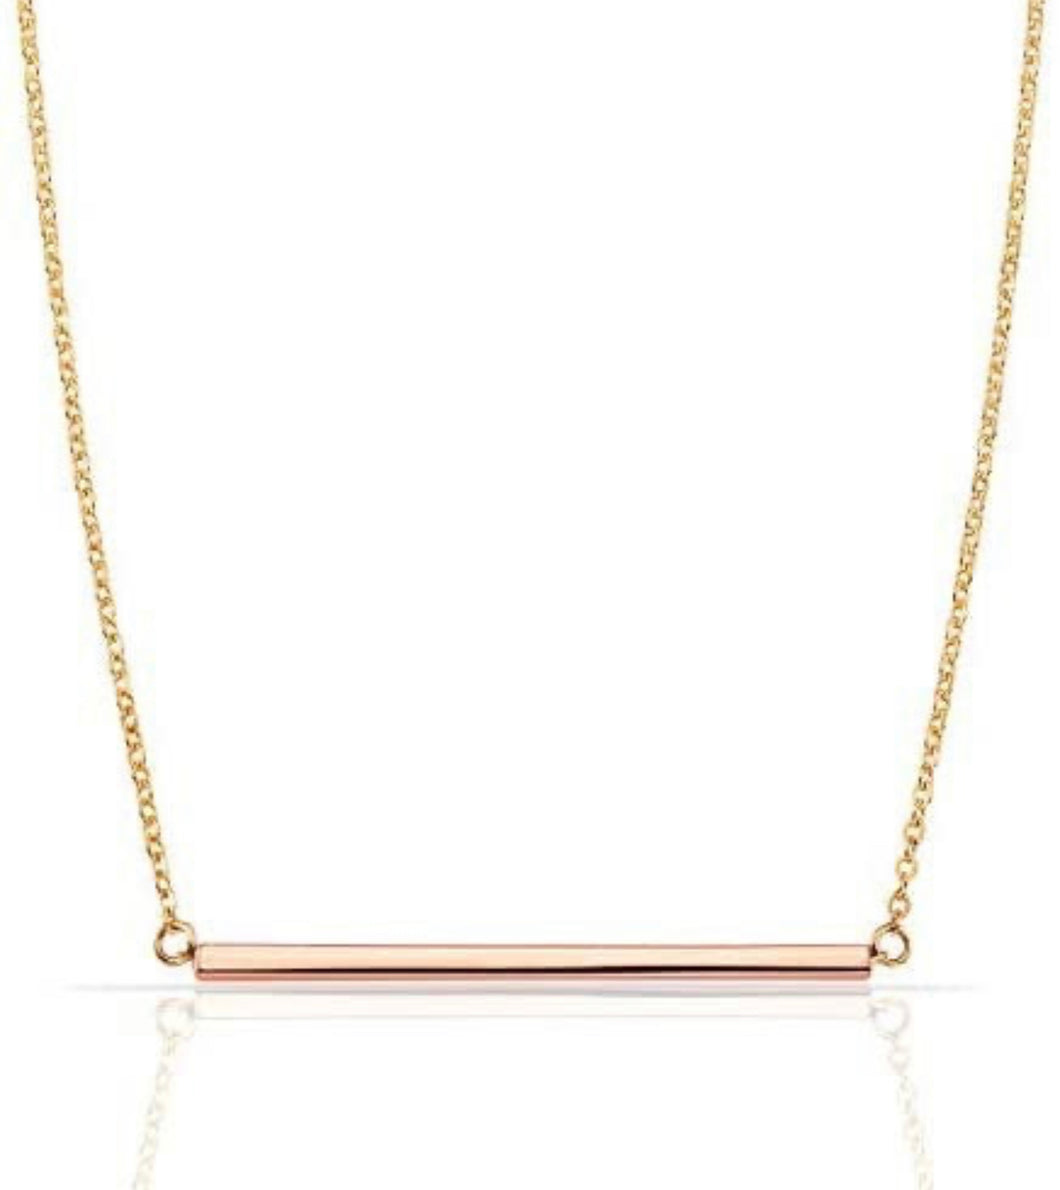 Solid 14k Gold Bar Necklace - Horizontal Geometric Bar Pendant - Cubic Zirconia Elegant Pendant